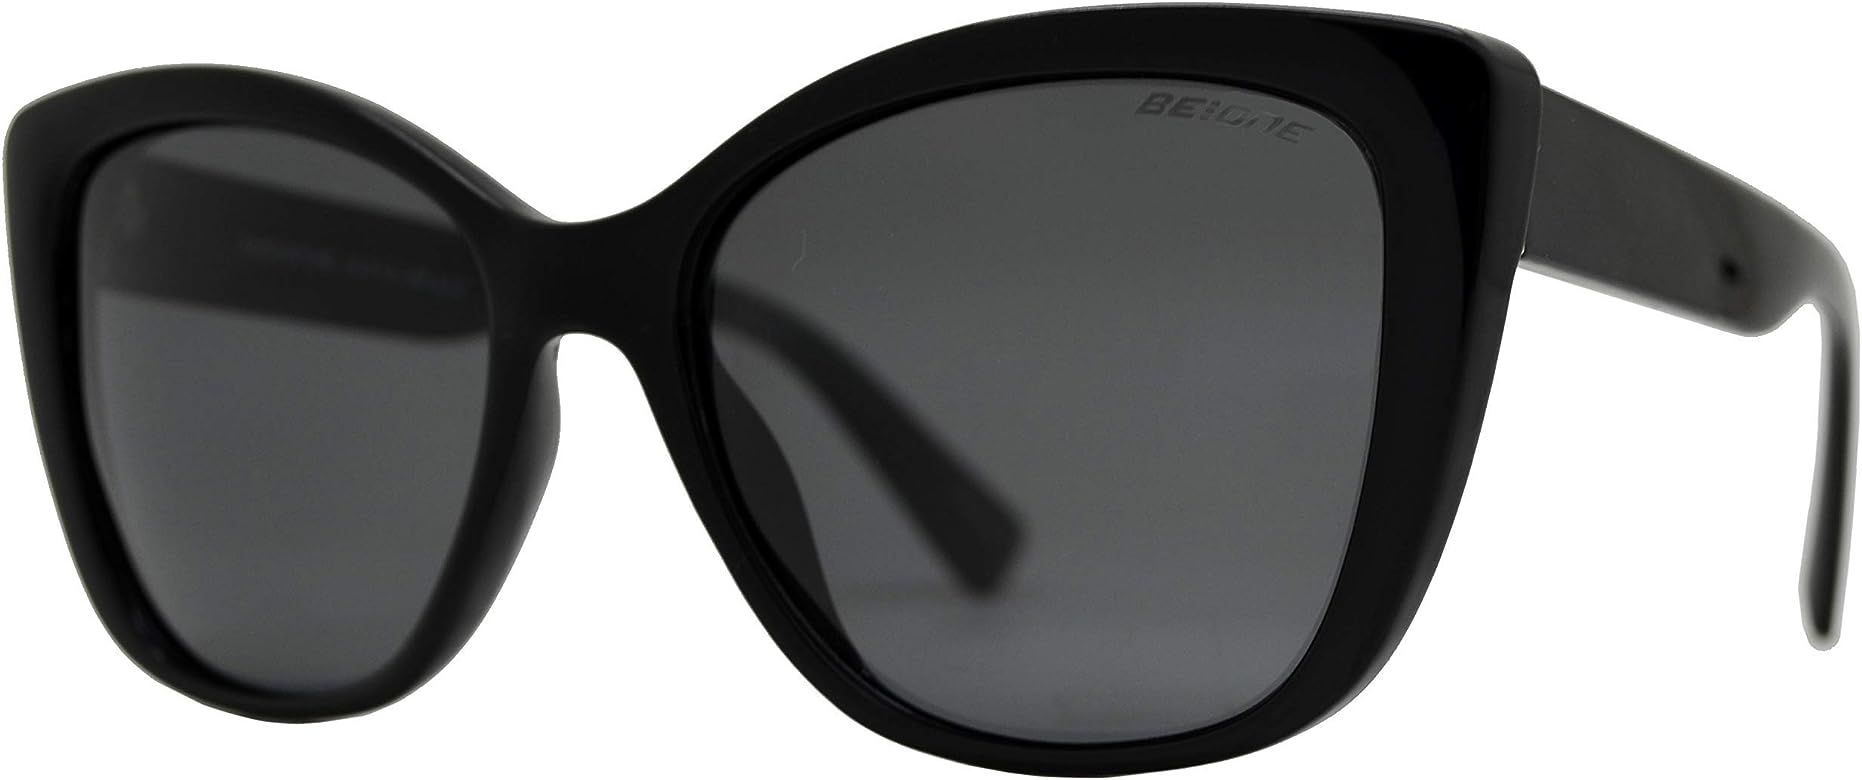 Be One Polarized Sunglasses for Women - Cat Eye Vintage Classic Retro Fashion Design UV Protection L | Amazon (US)